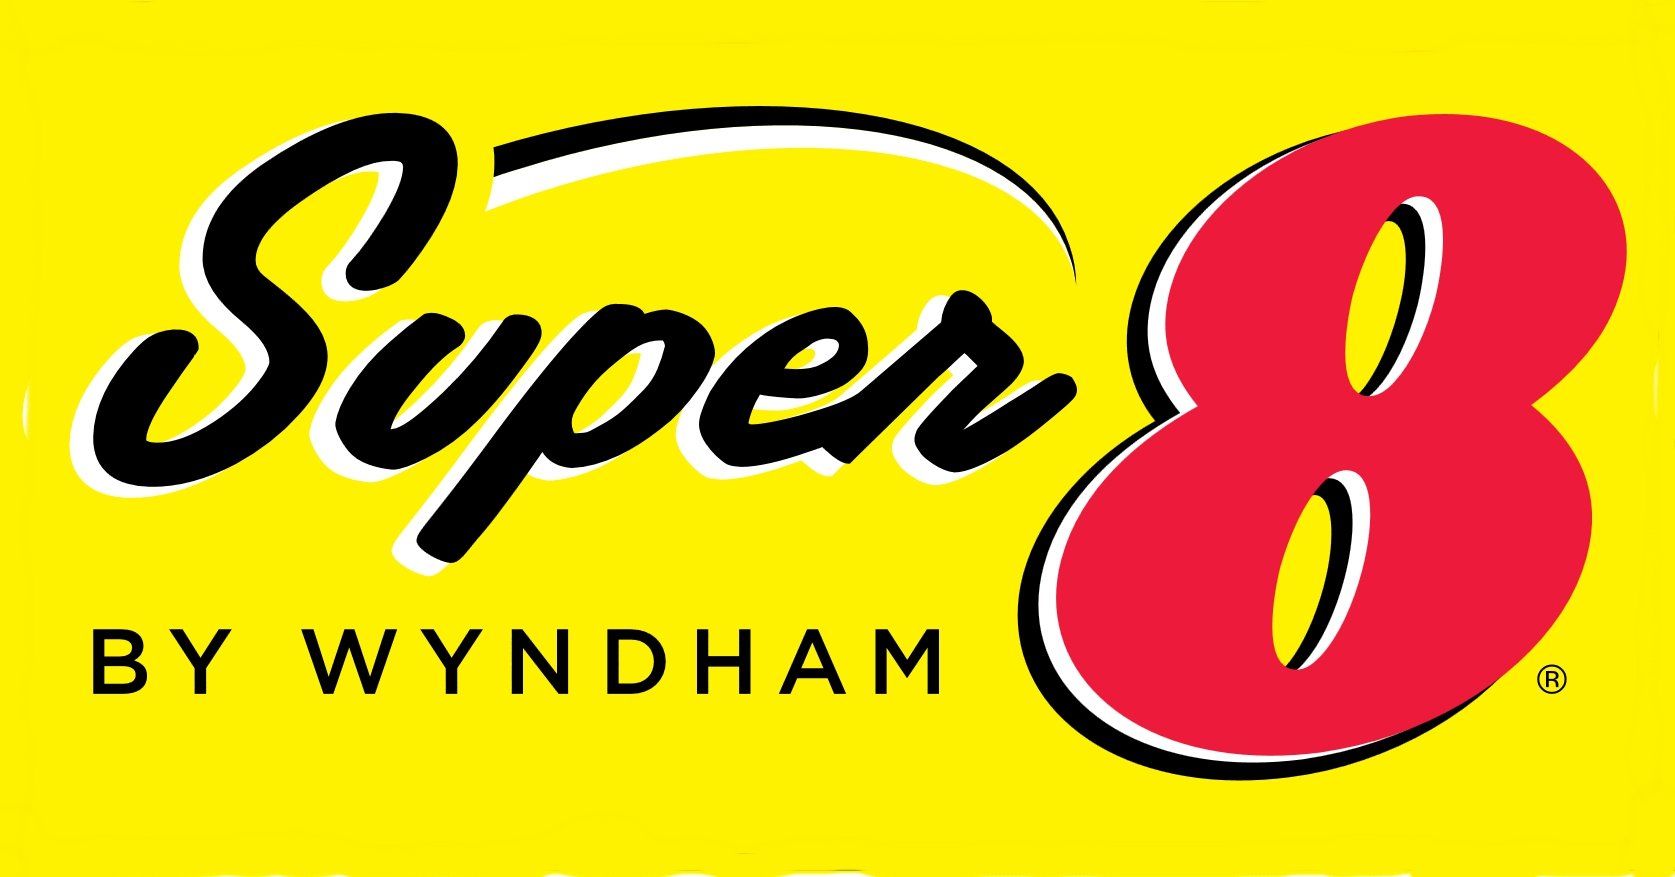 Super 8 Motel logo